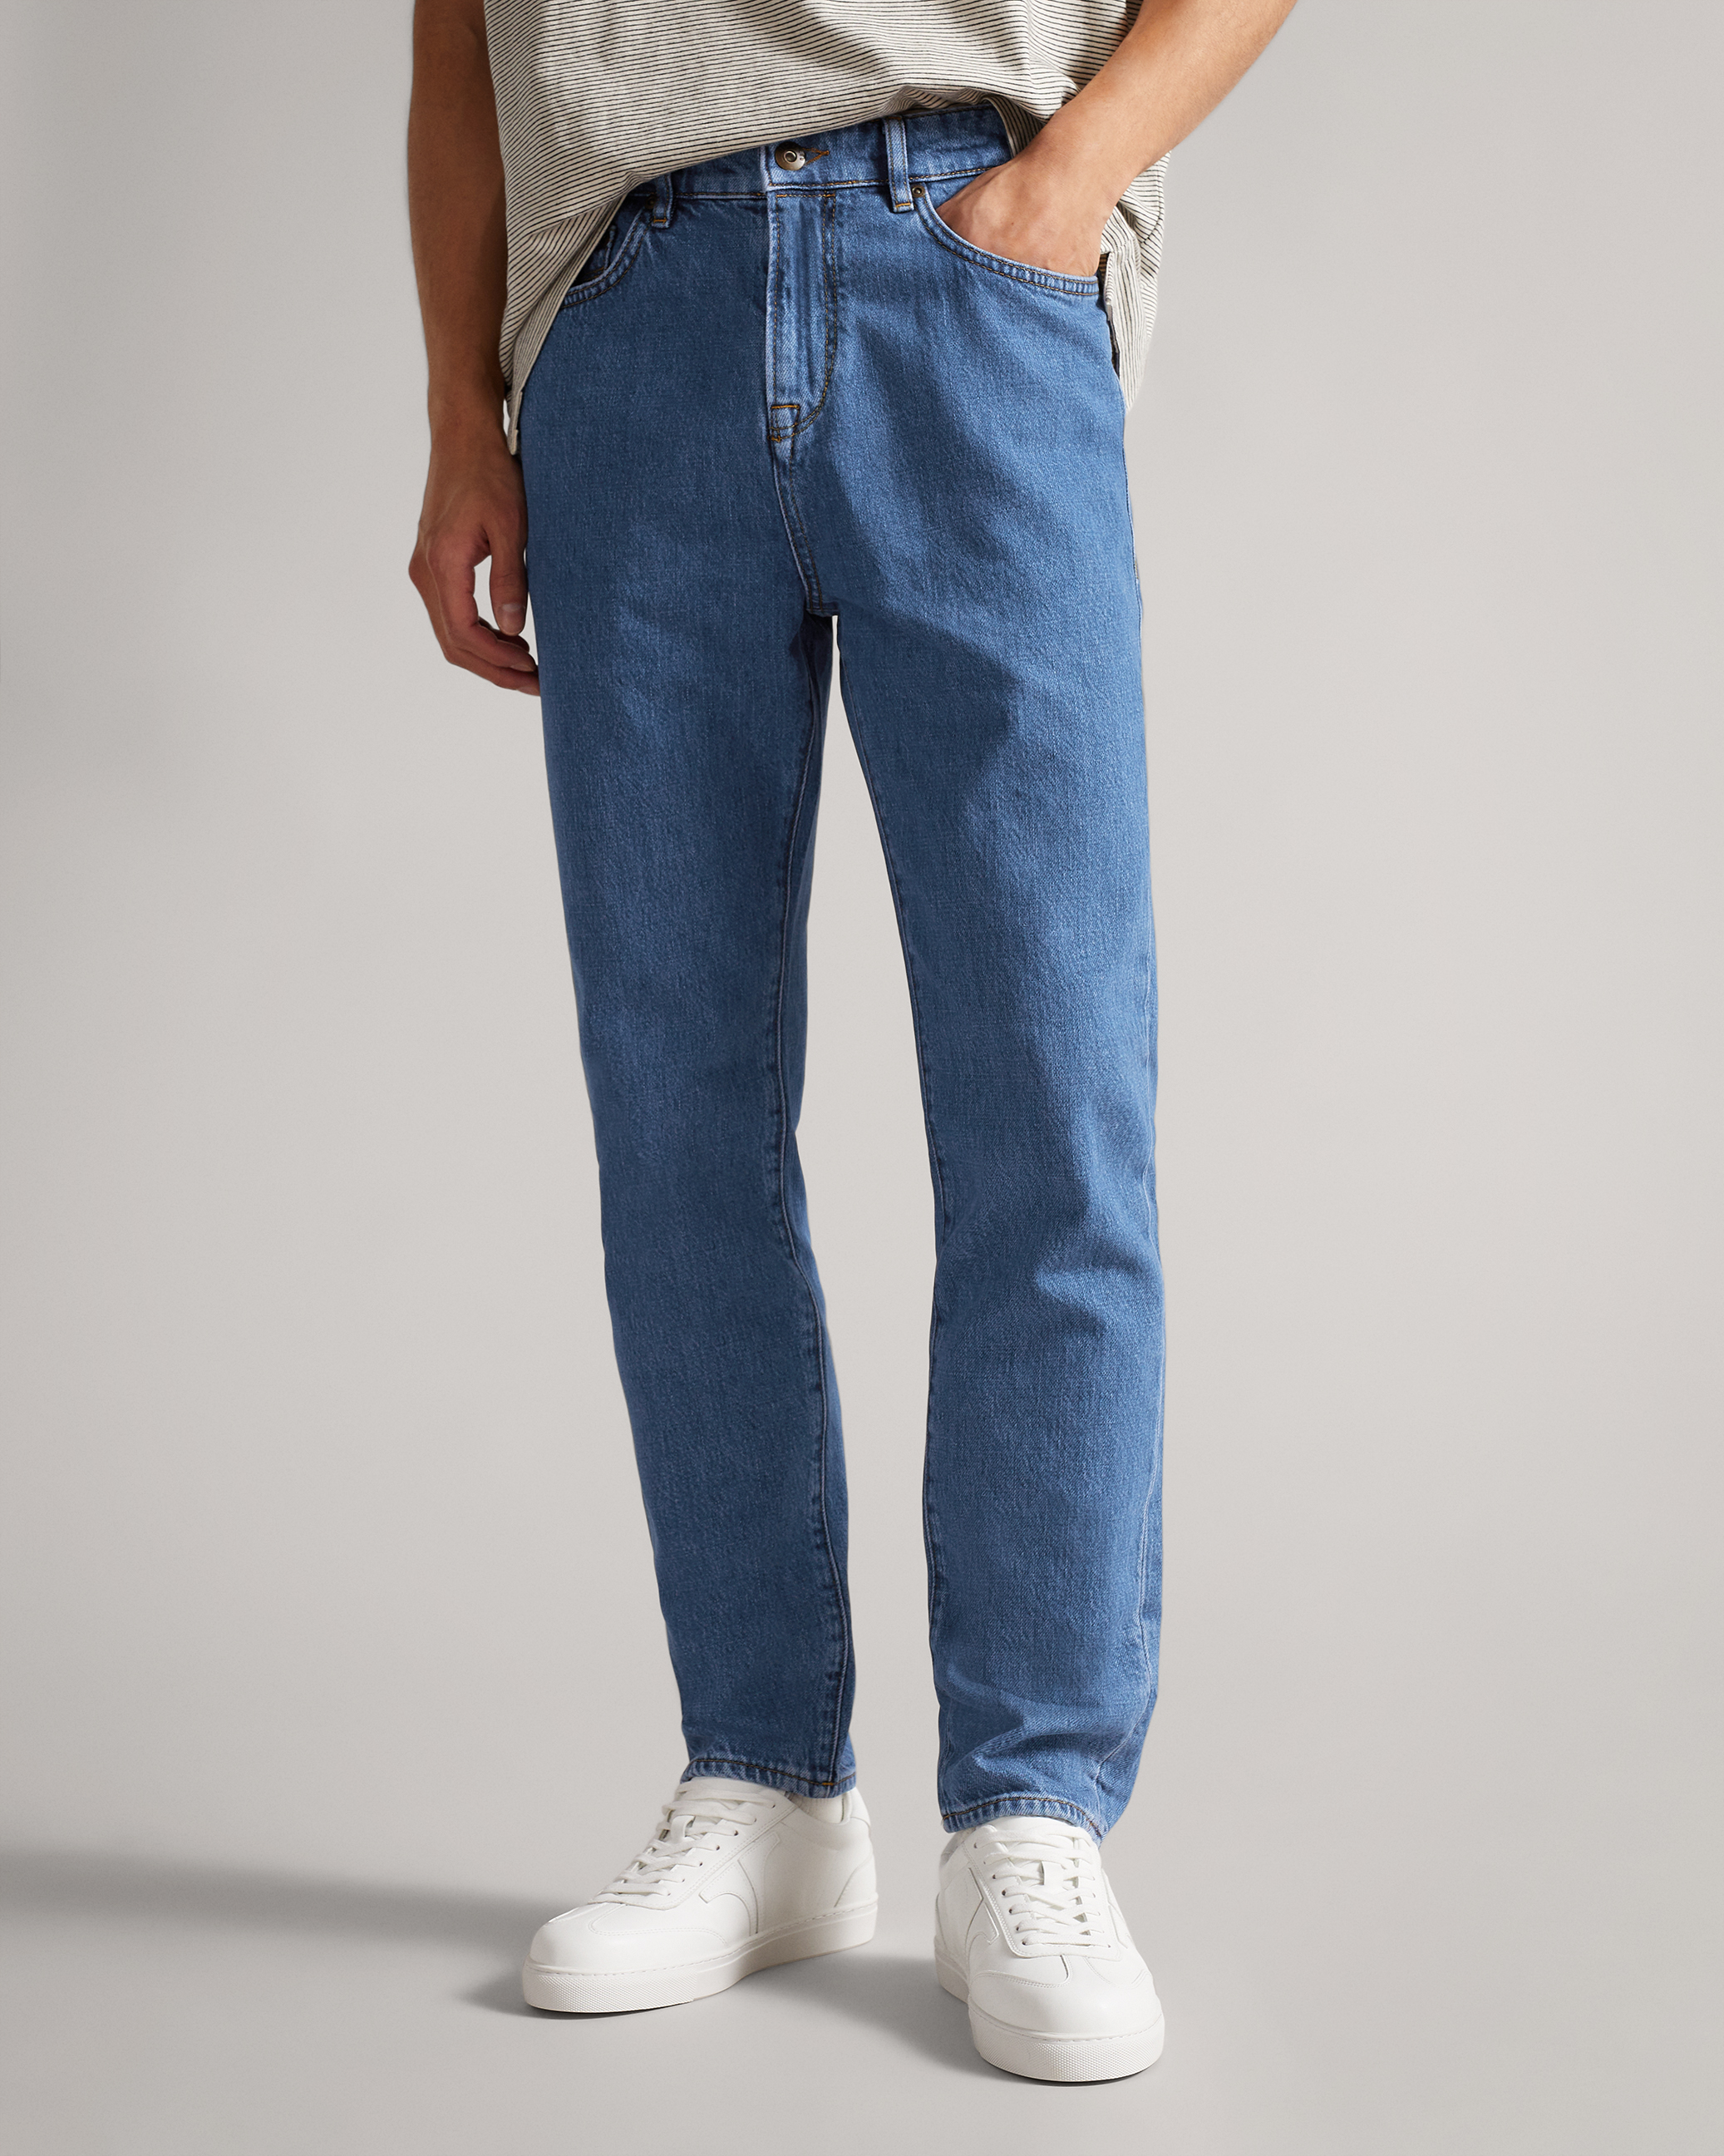 Men's Designer Jeans, Men's Jeans